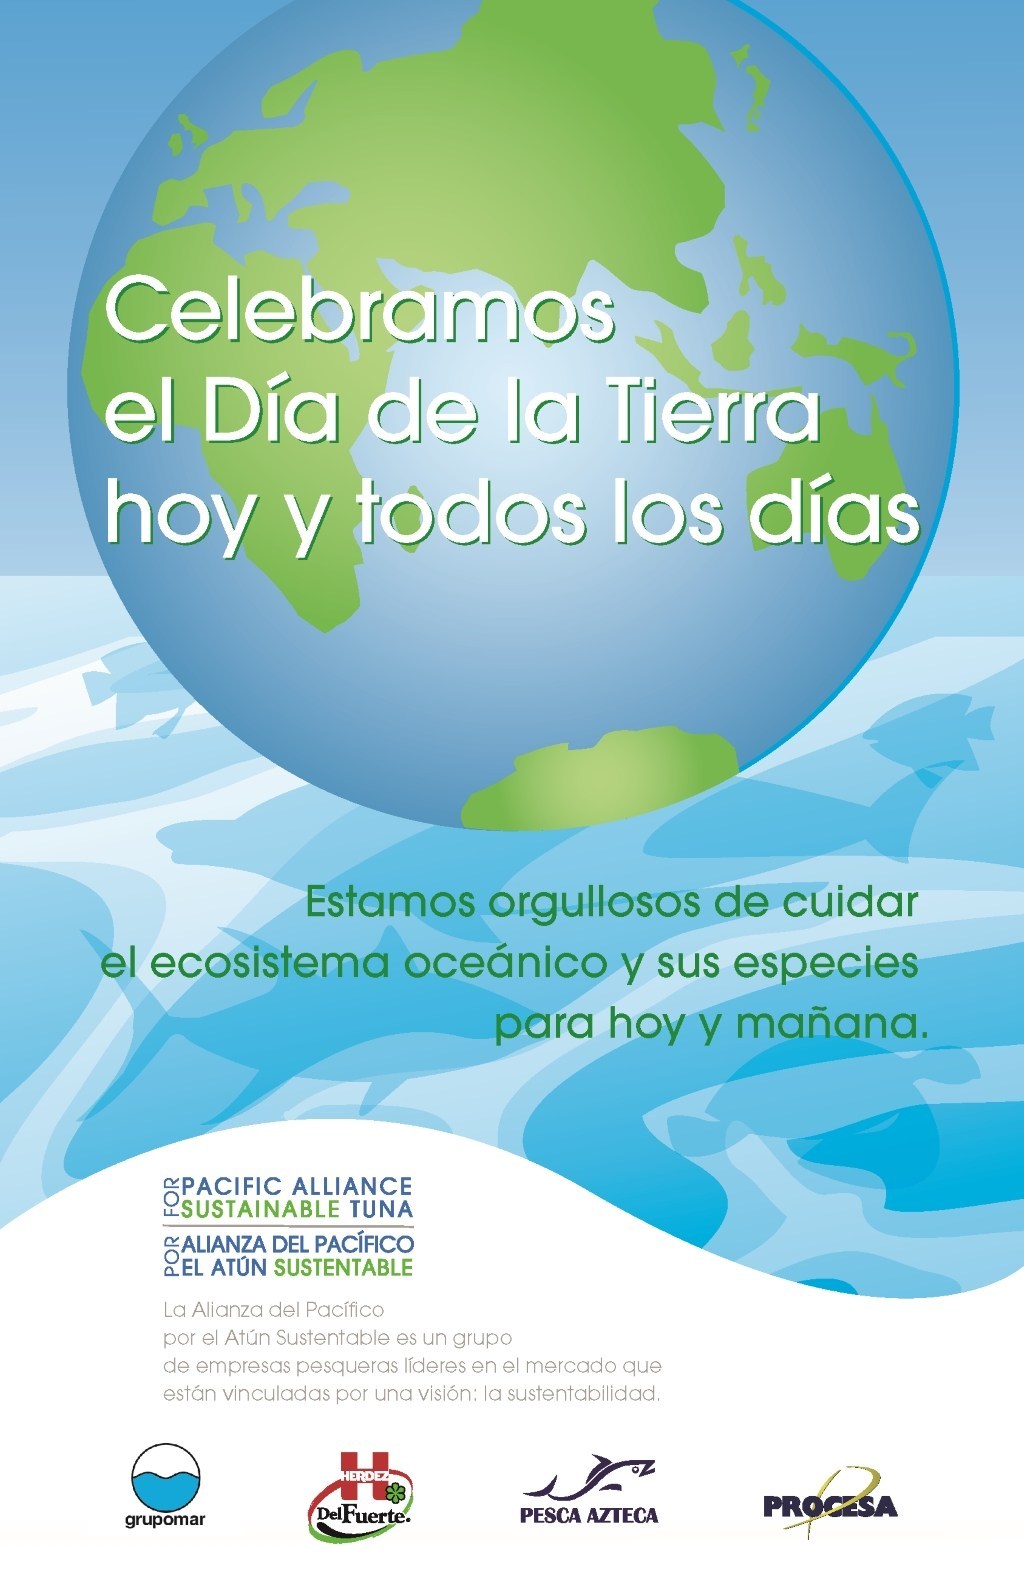 earthday poster